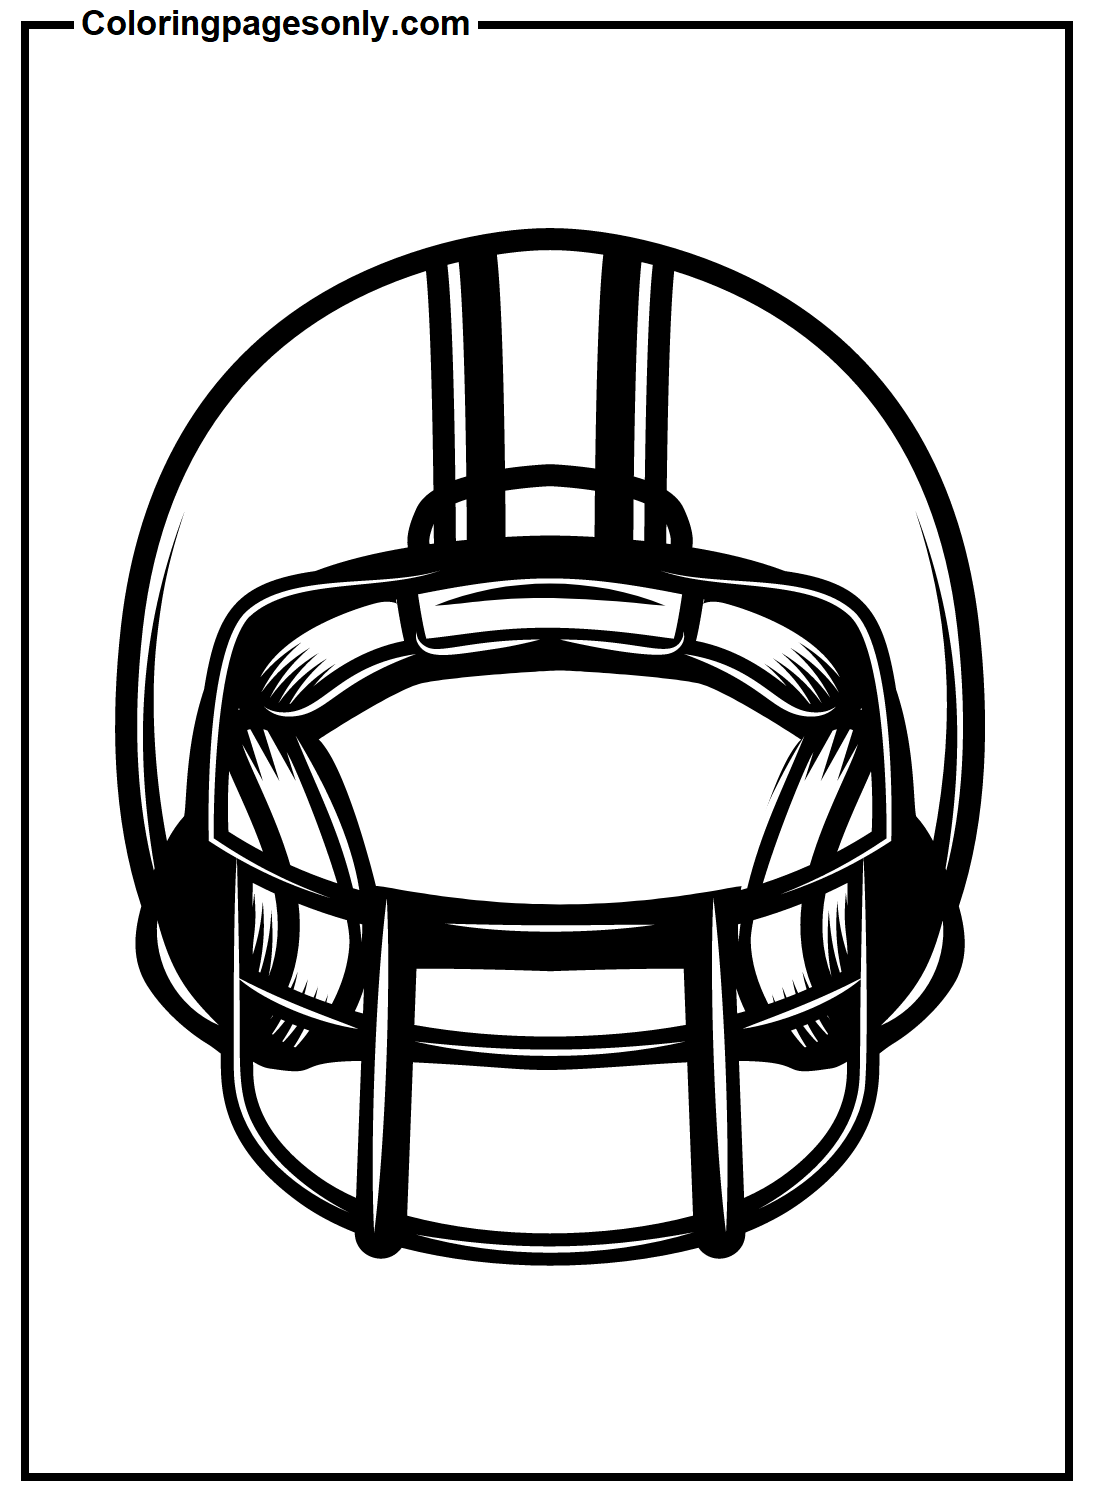 Immagine del casco del Super Bowl dal Super Bowl 2024